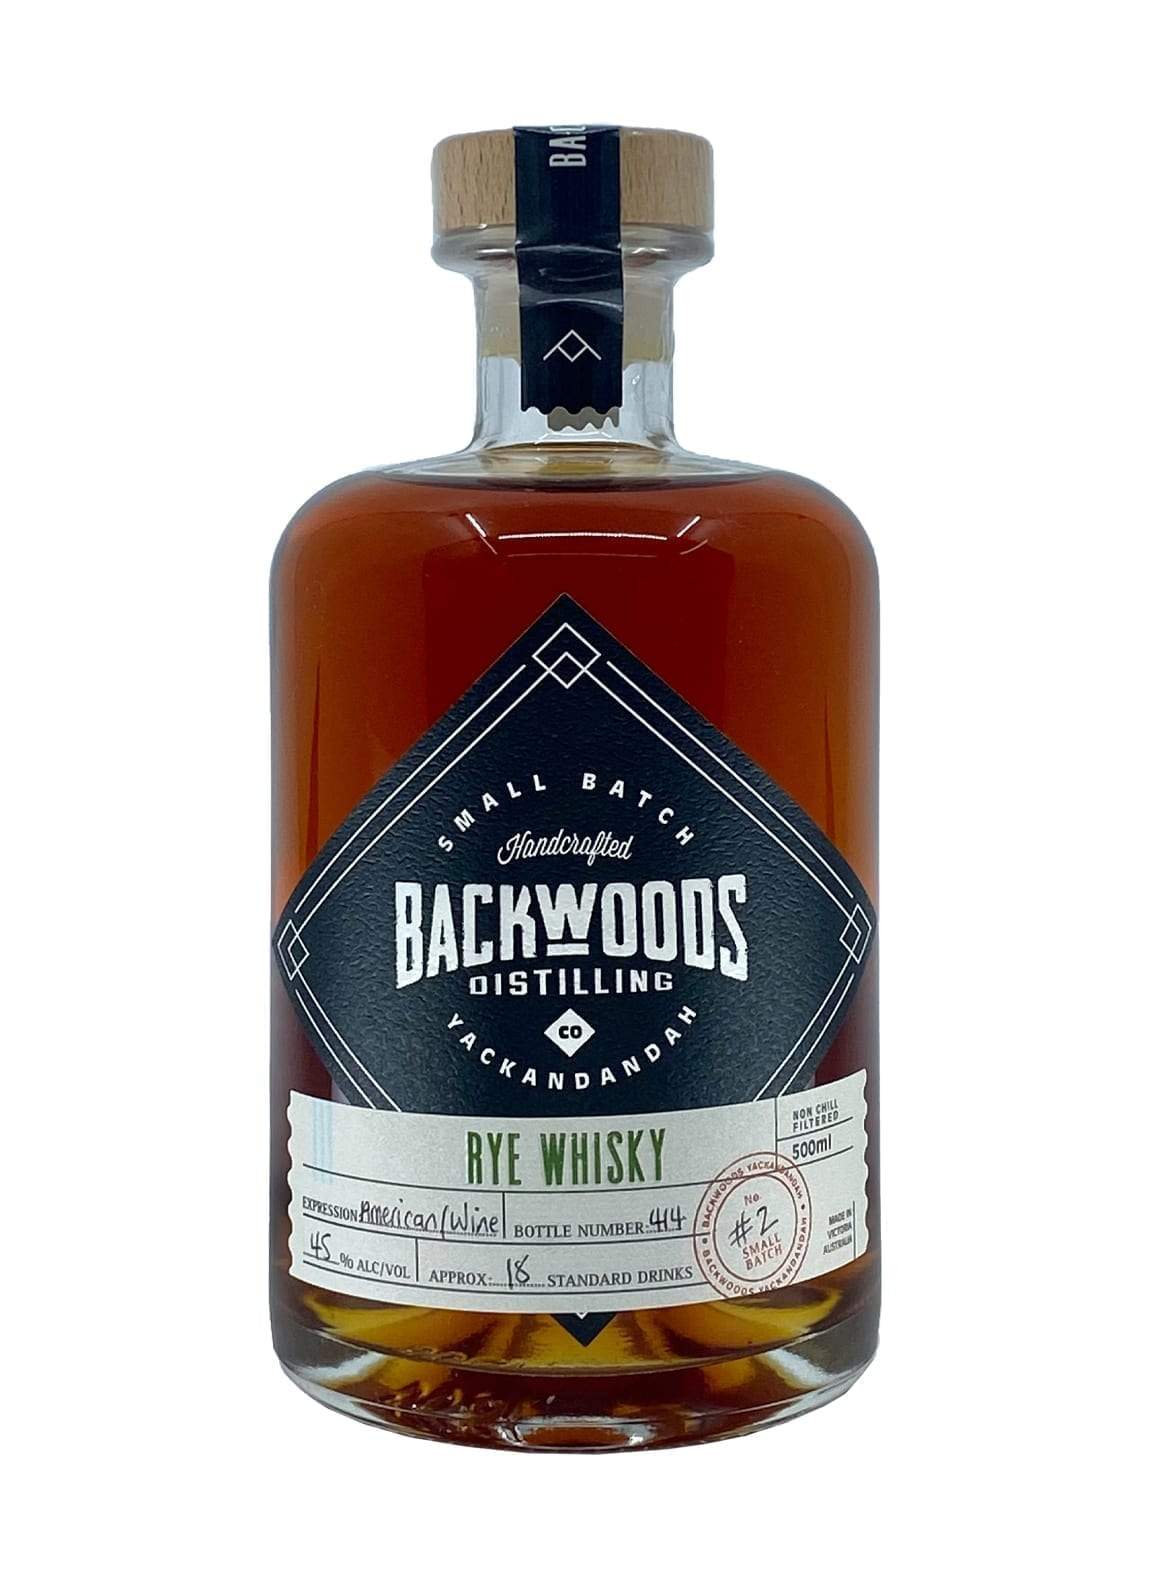 Backwoods Rye Whisky 46% 500ml | Whiskey | Shop online at Spirits of France